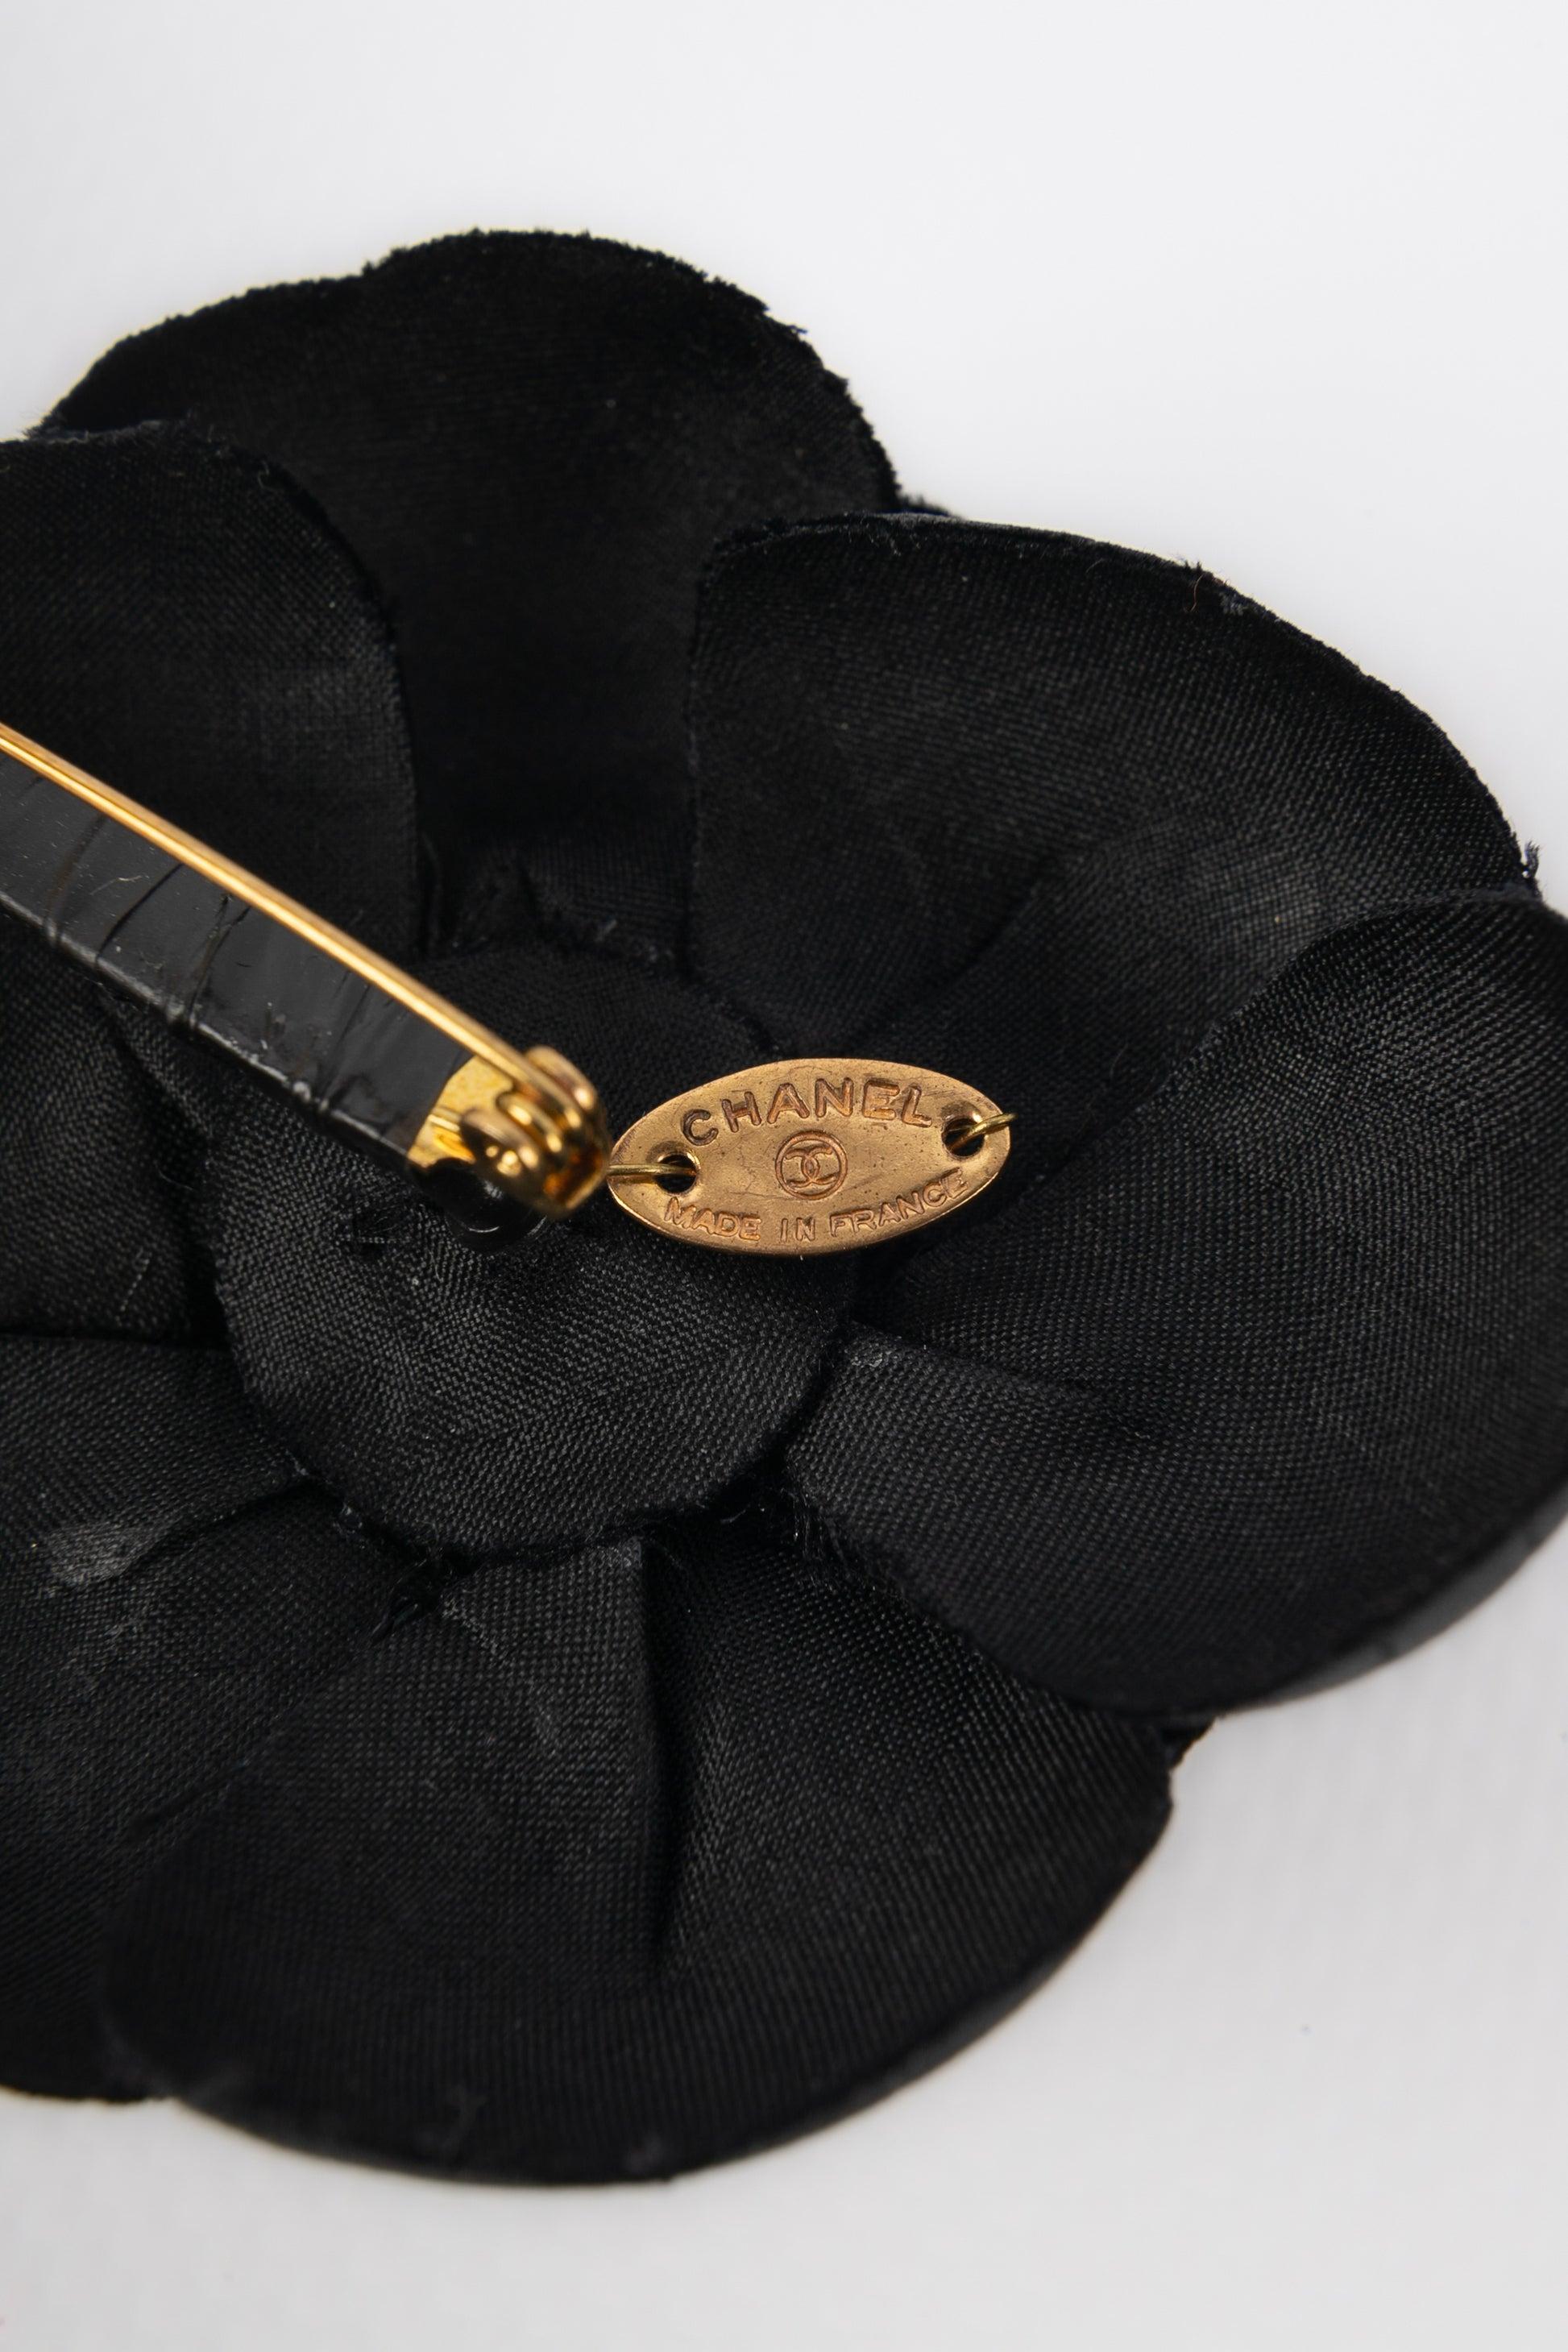 Chanel Black Woven Fabric Camellia Brooch 1